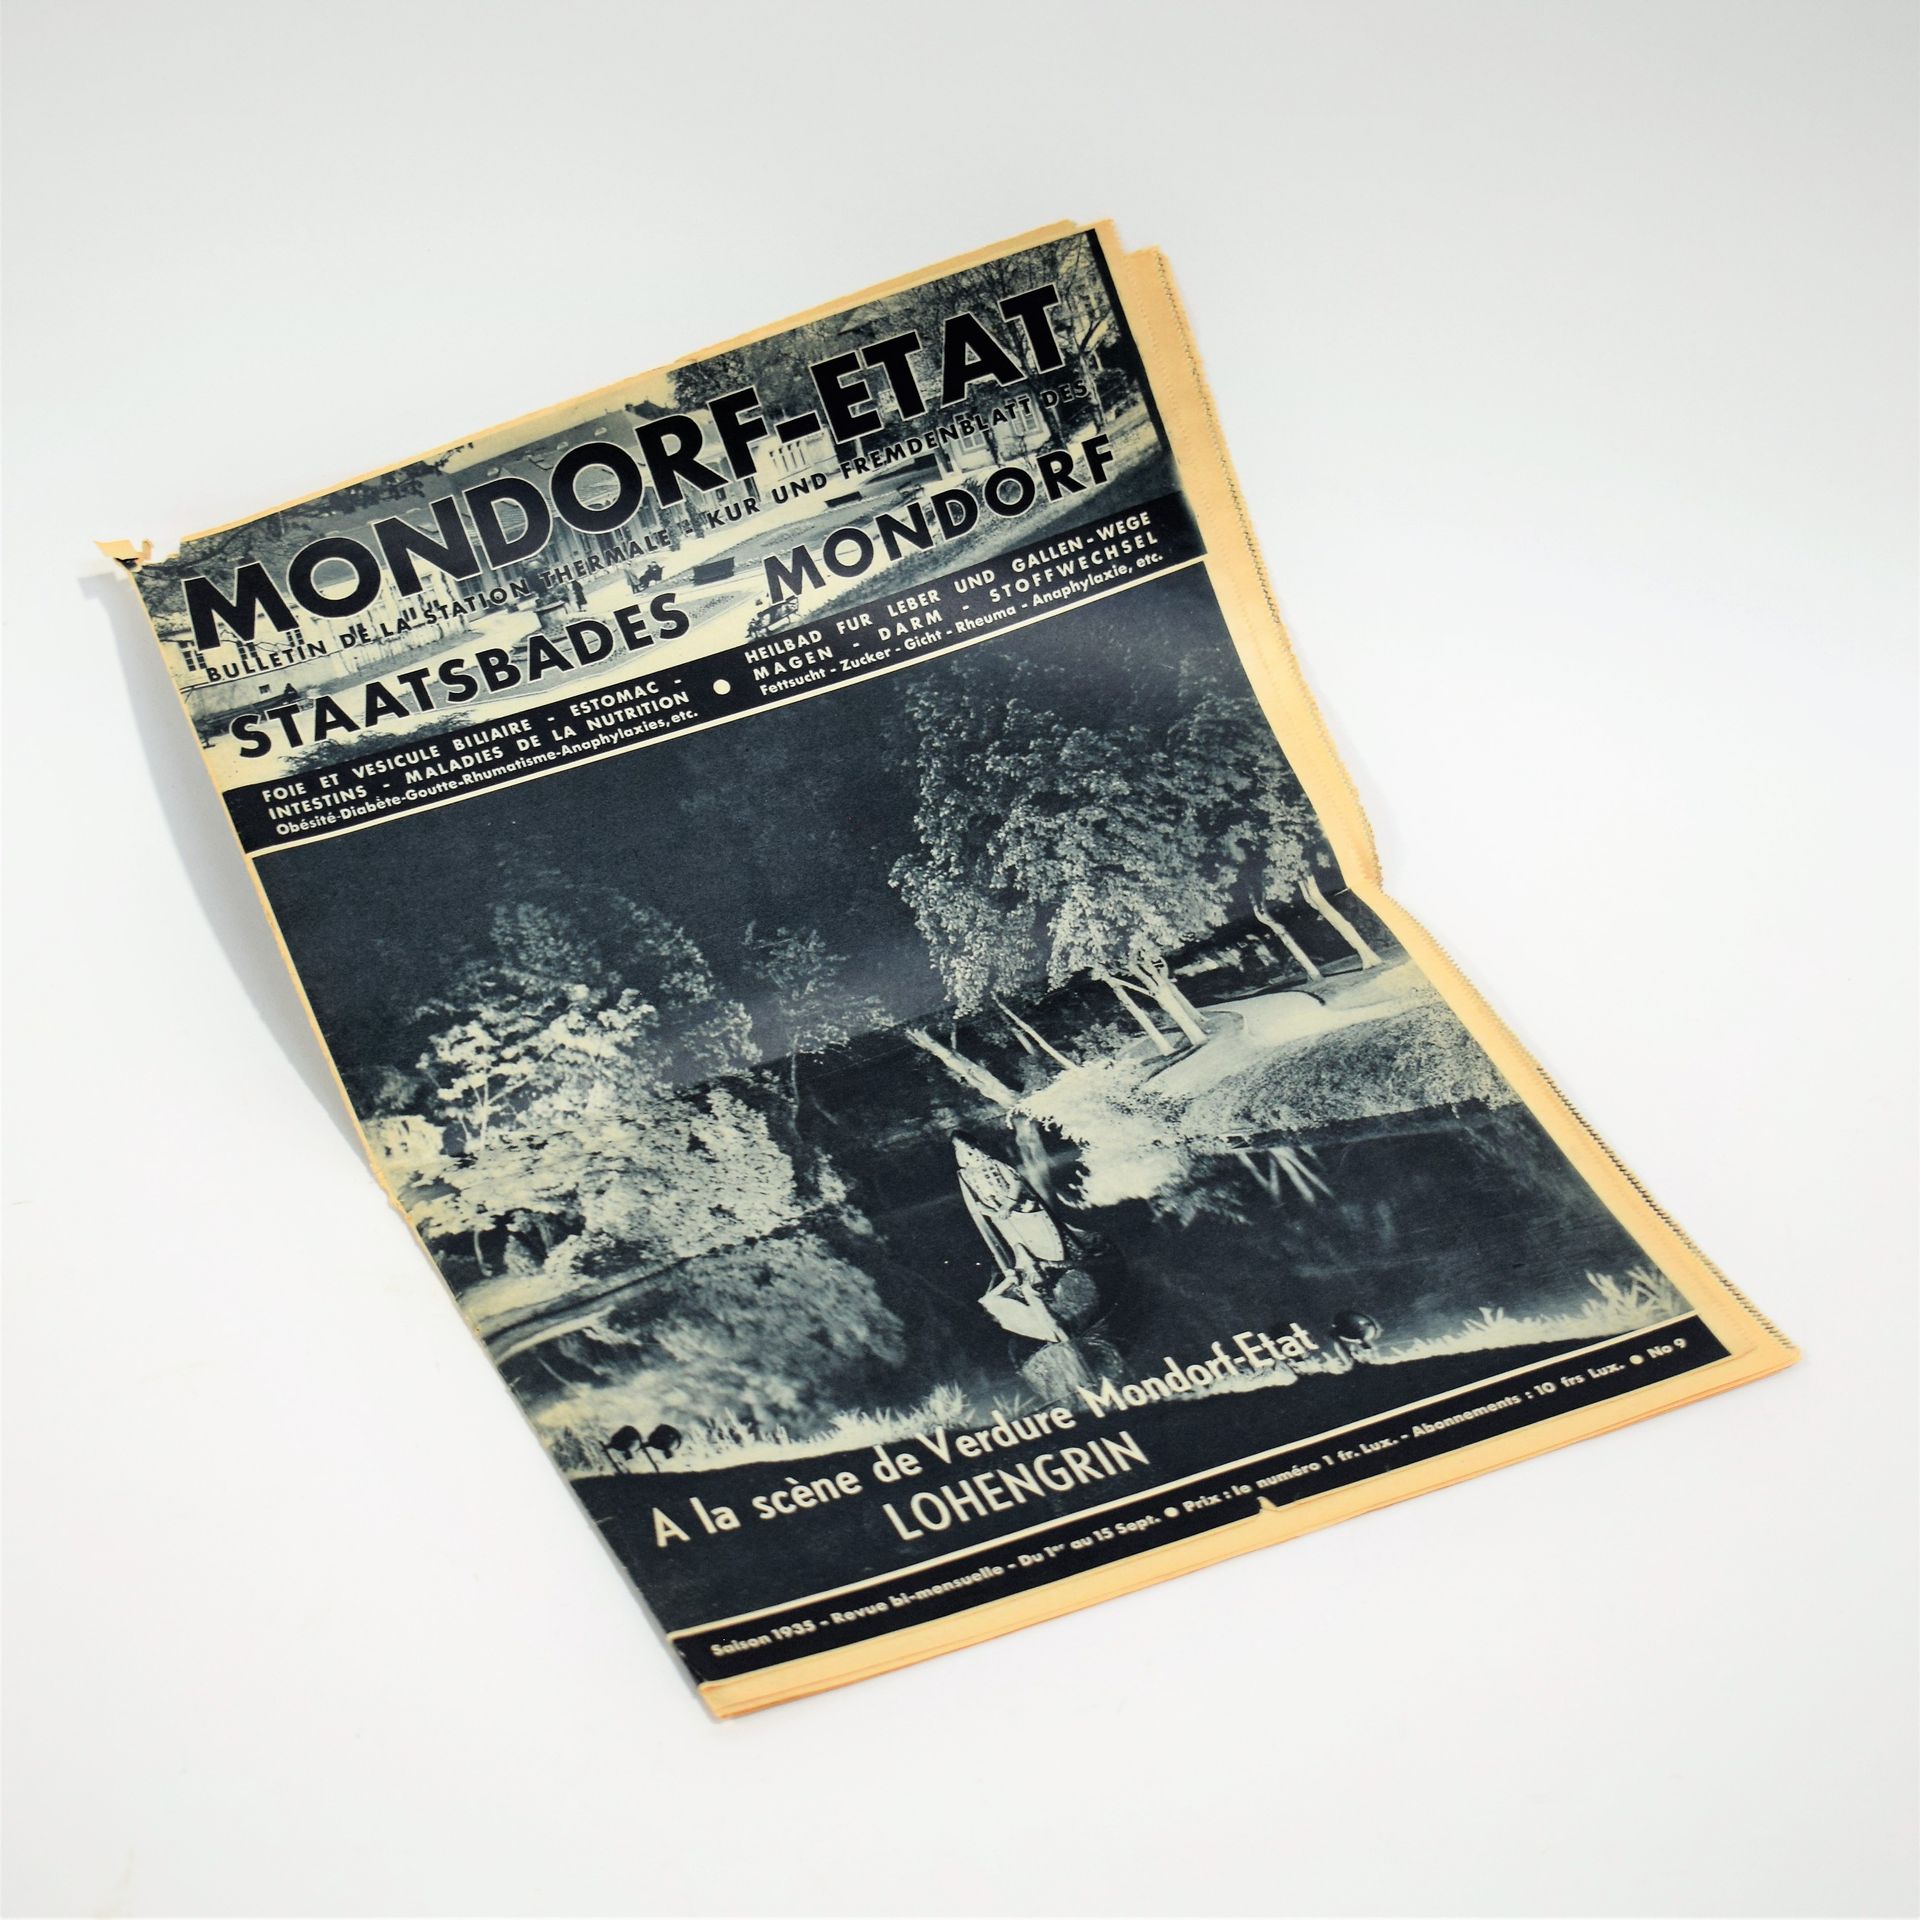 Null (MONDORF) Bulletin de la station thermale MONDORF-ETAT, Broschüre mit Werbu&hellip;